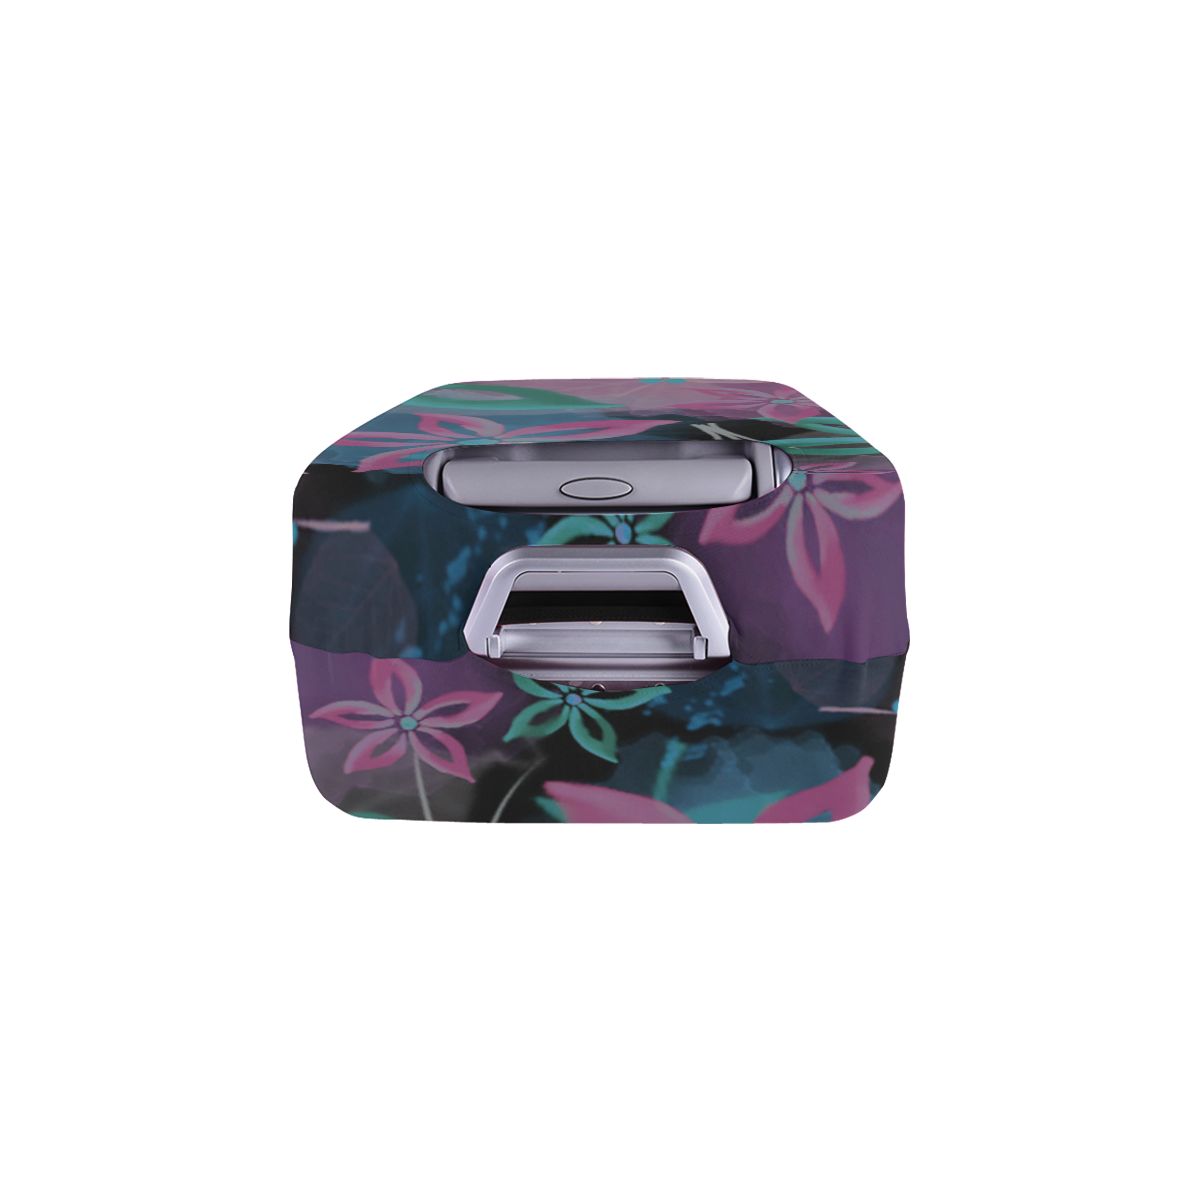 Flower Pattern - black, teal green, purple, pink Luggage Cover/Medium 22"-25"